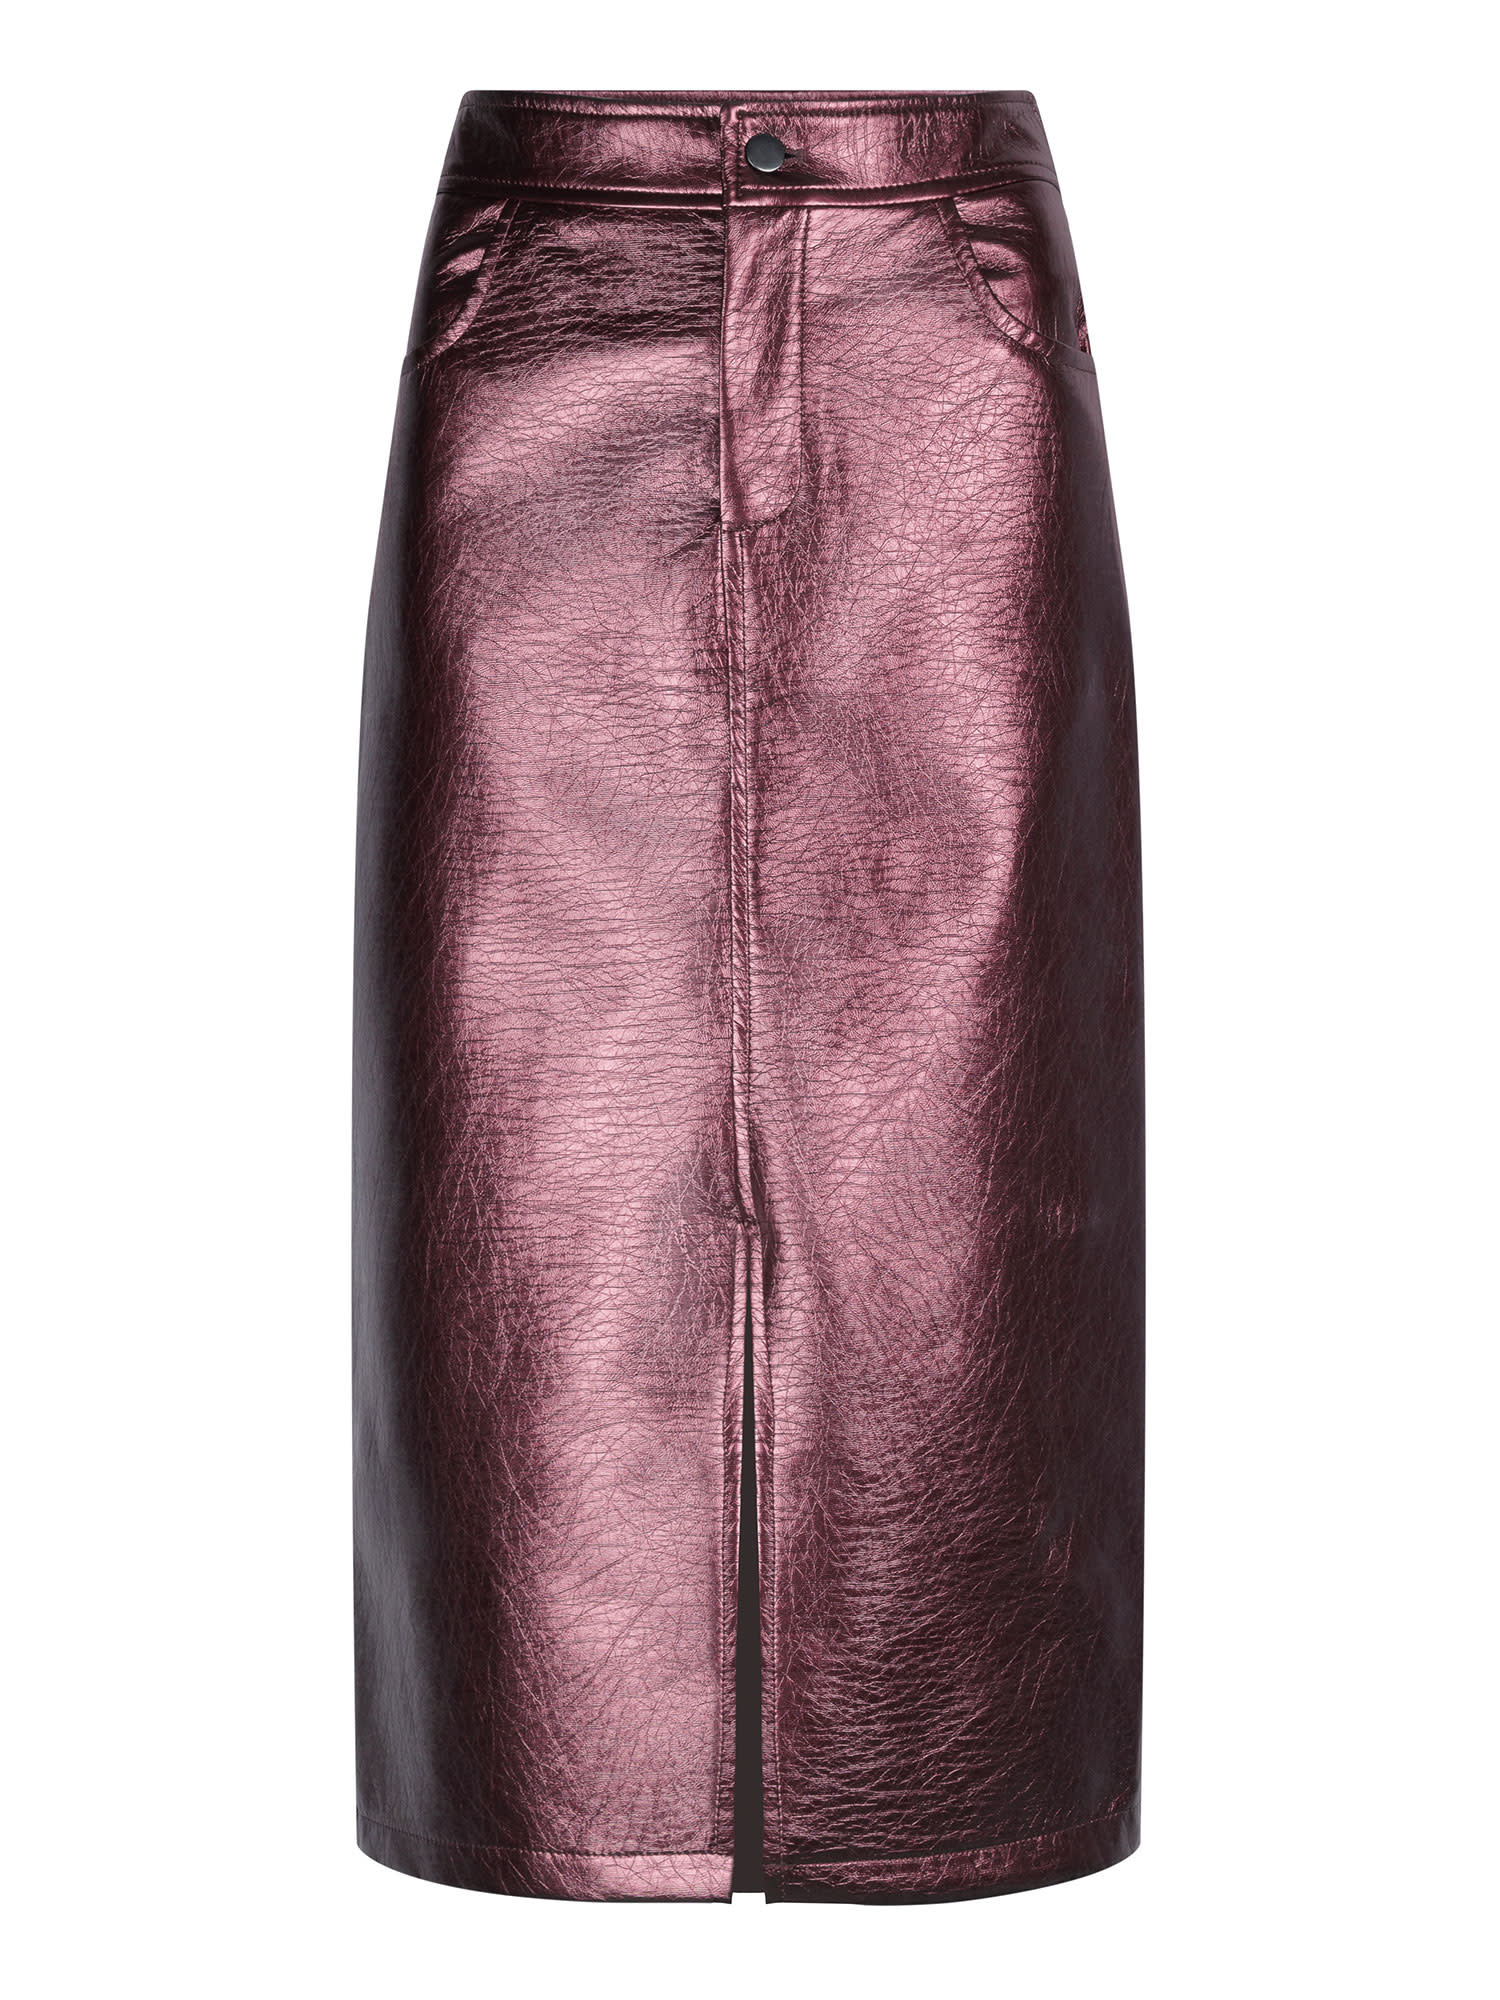 YDENCE YDENCE - Skirt hazel burgundy MAAT XS